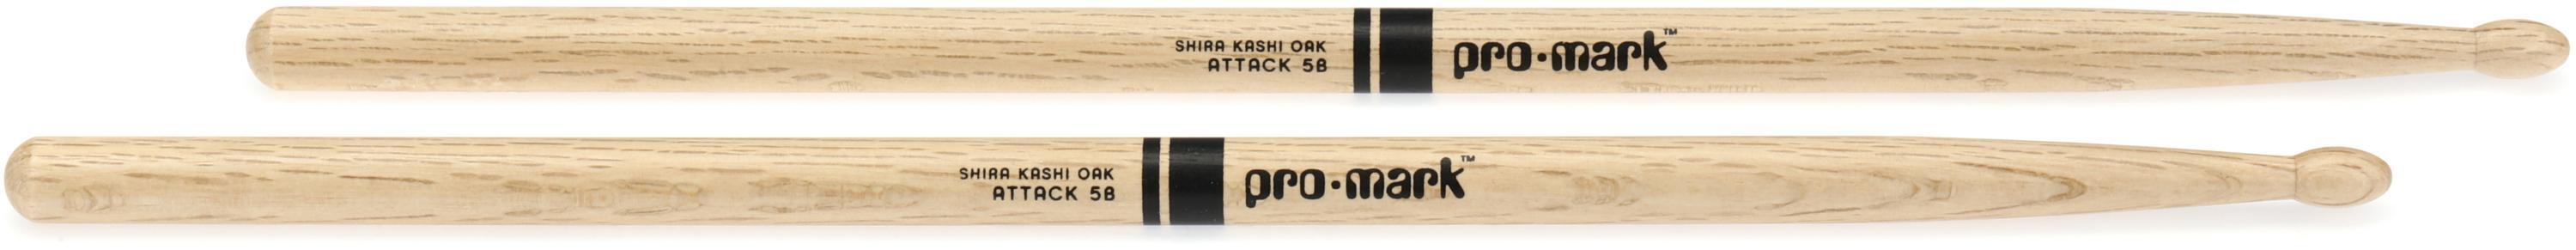 Promark Classic Attack Drumsticks - Shira Kashi Oak - 5B - Wood